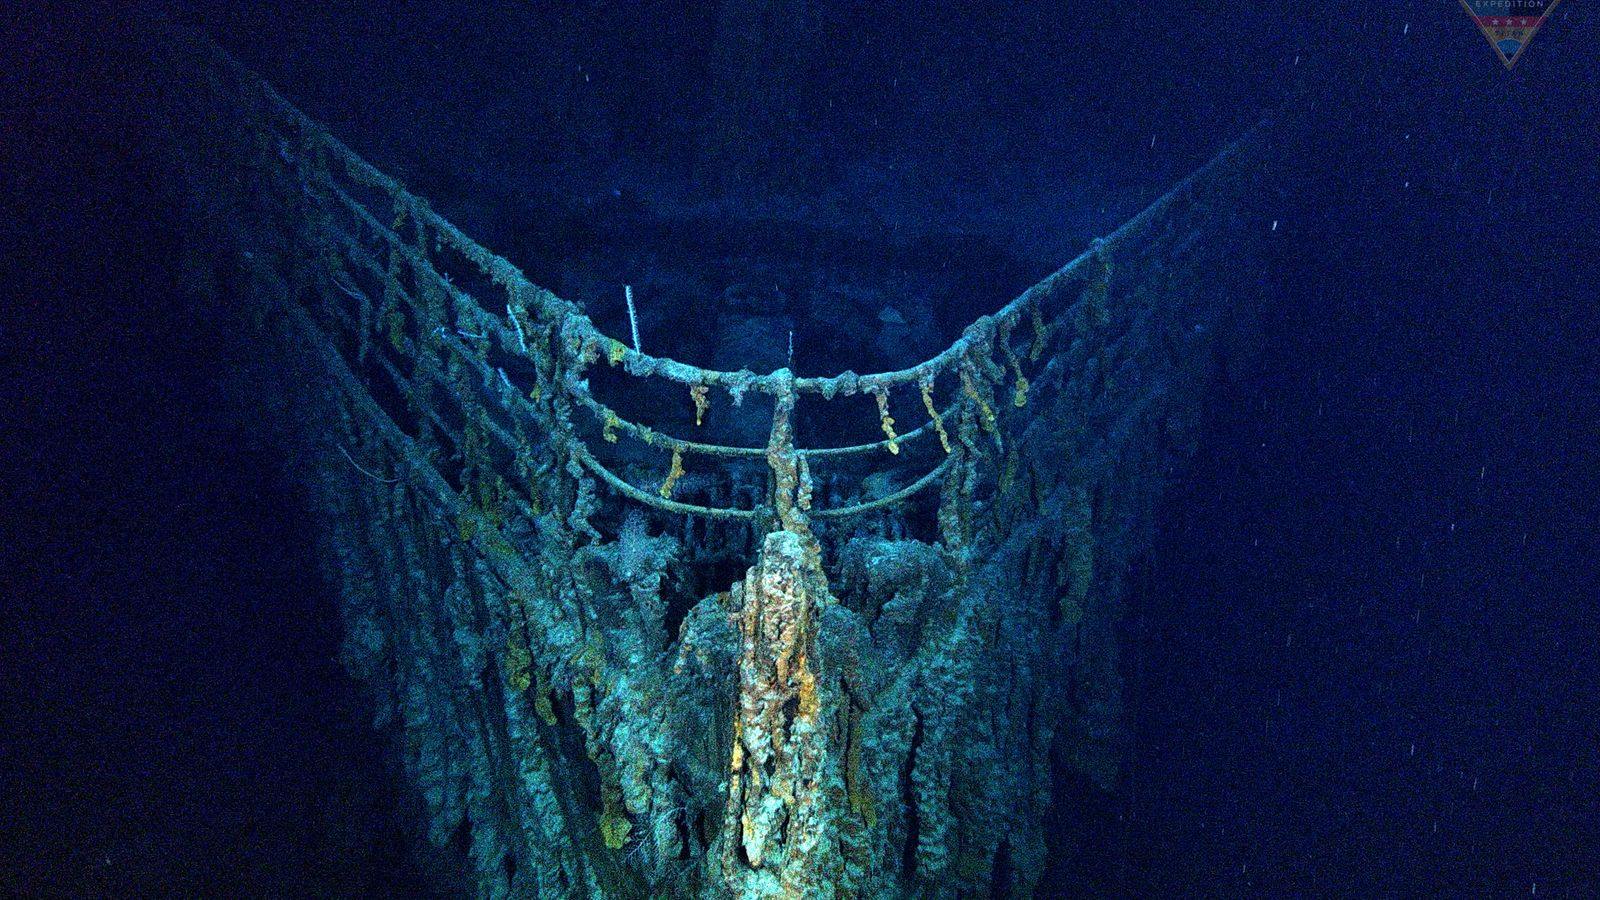 Затонувший Титаник 2020